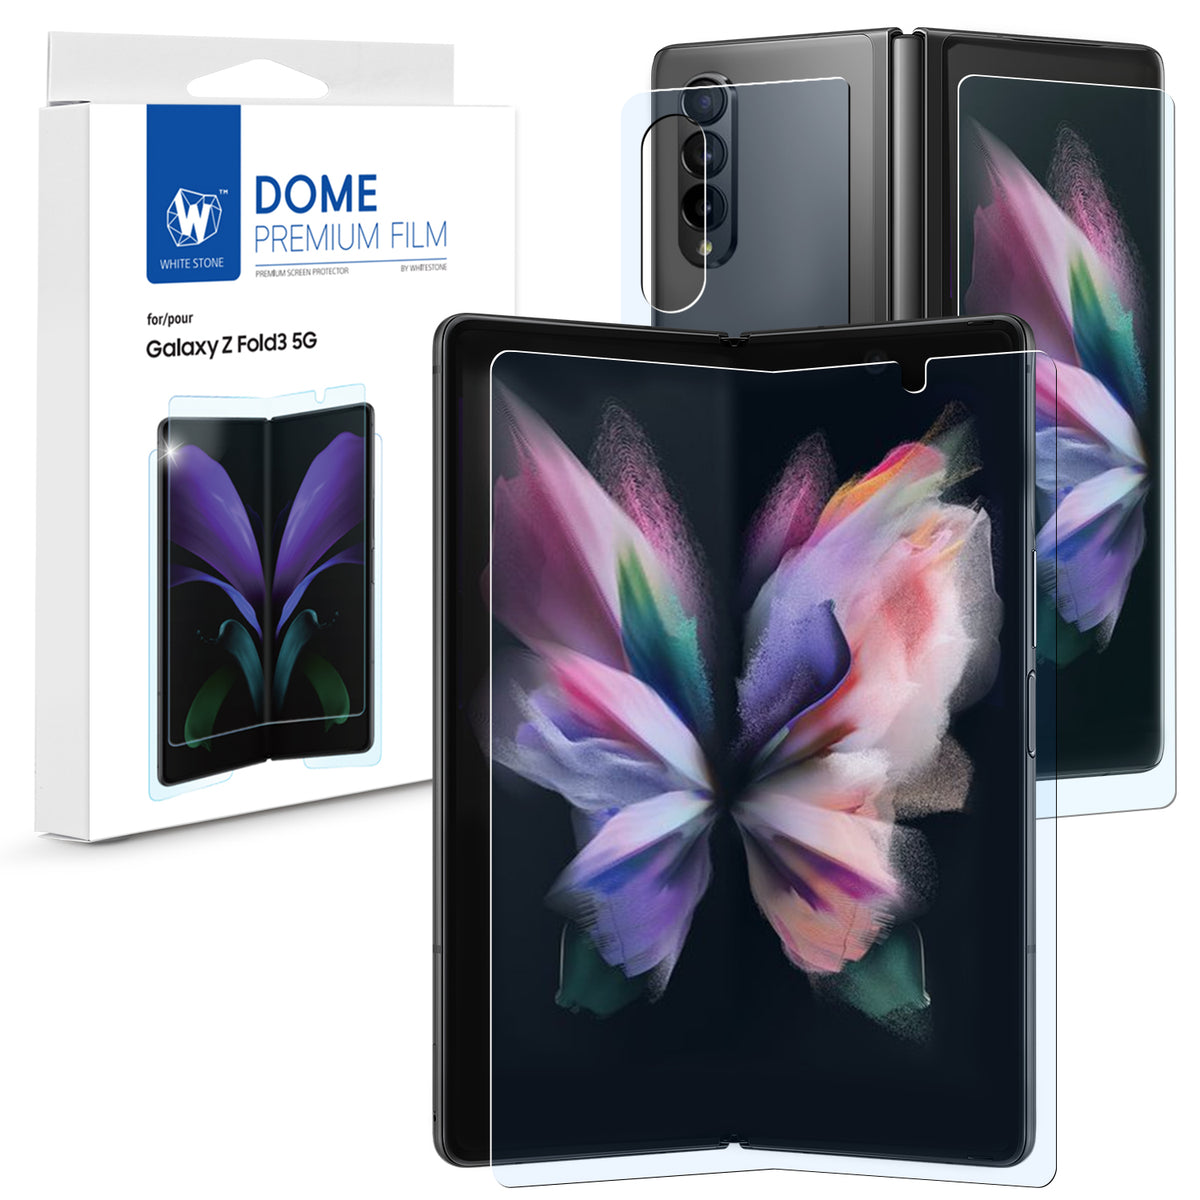 Dome Film] Samsung Galaxy Z Flip 3 Film Screen Protector [1SET 4PCS] –  Whitestonedome